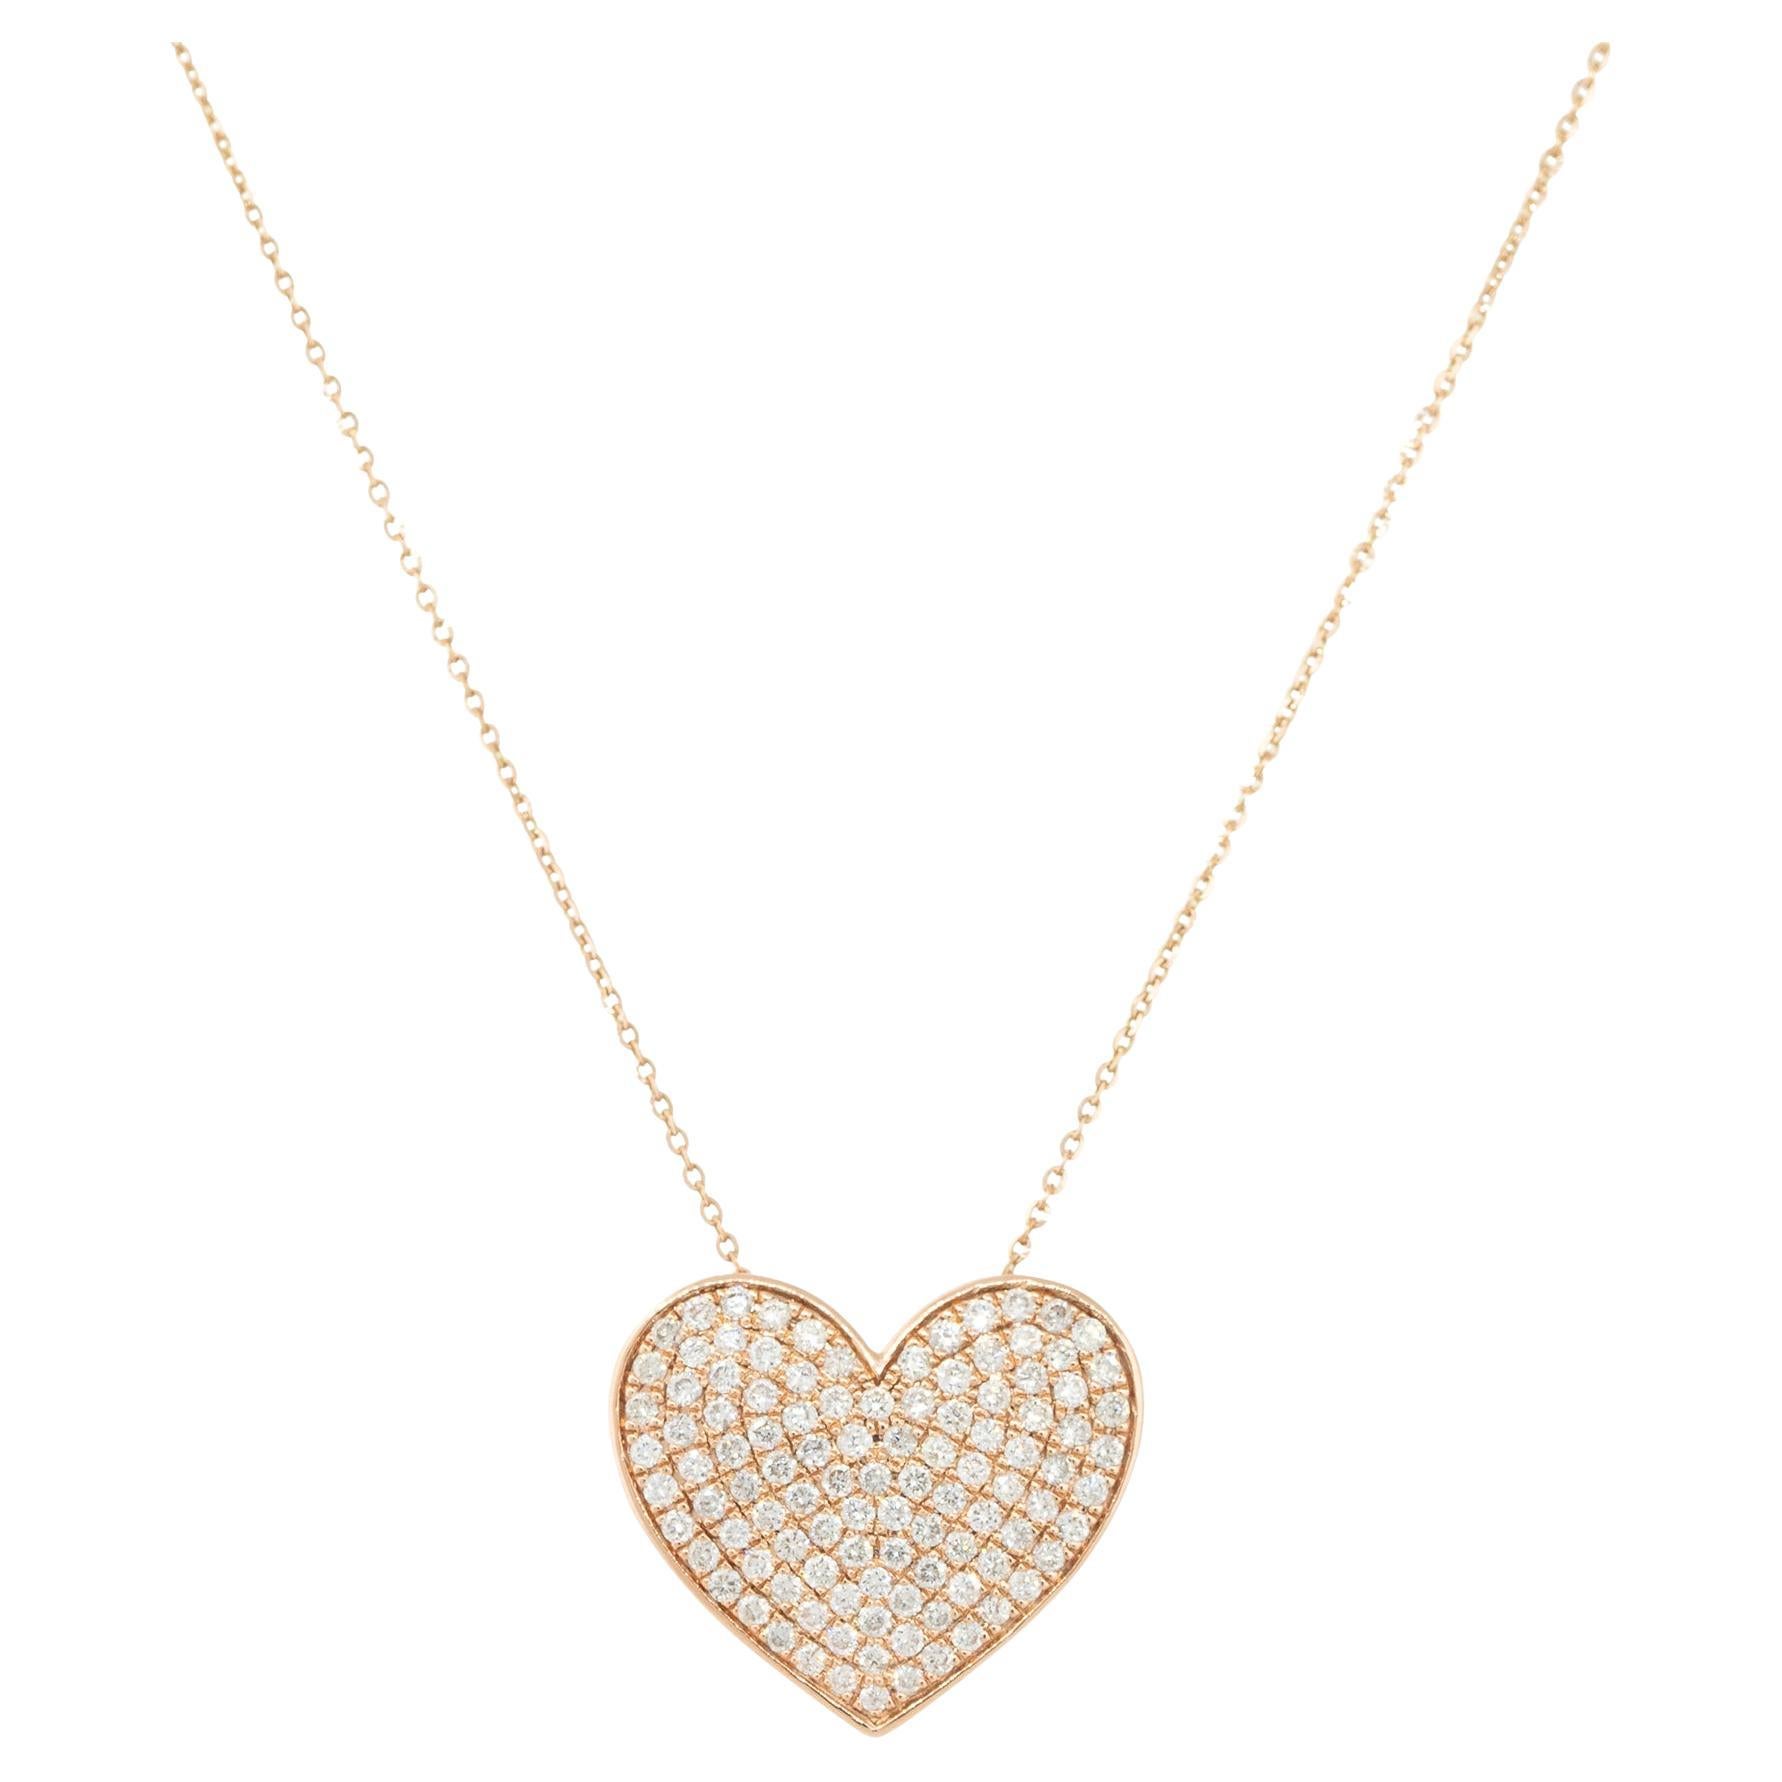 1.01 Carat Pave Diamond Heart Pendant Necklace 14 Karat In Stock For Sale